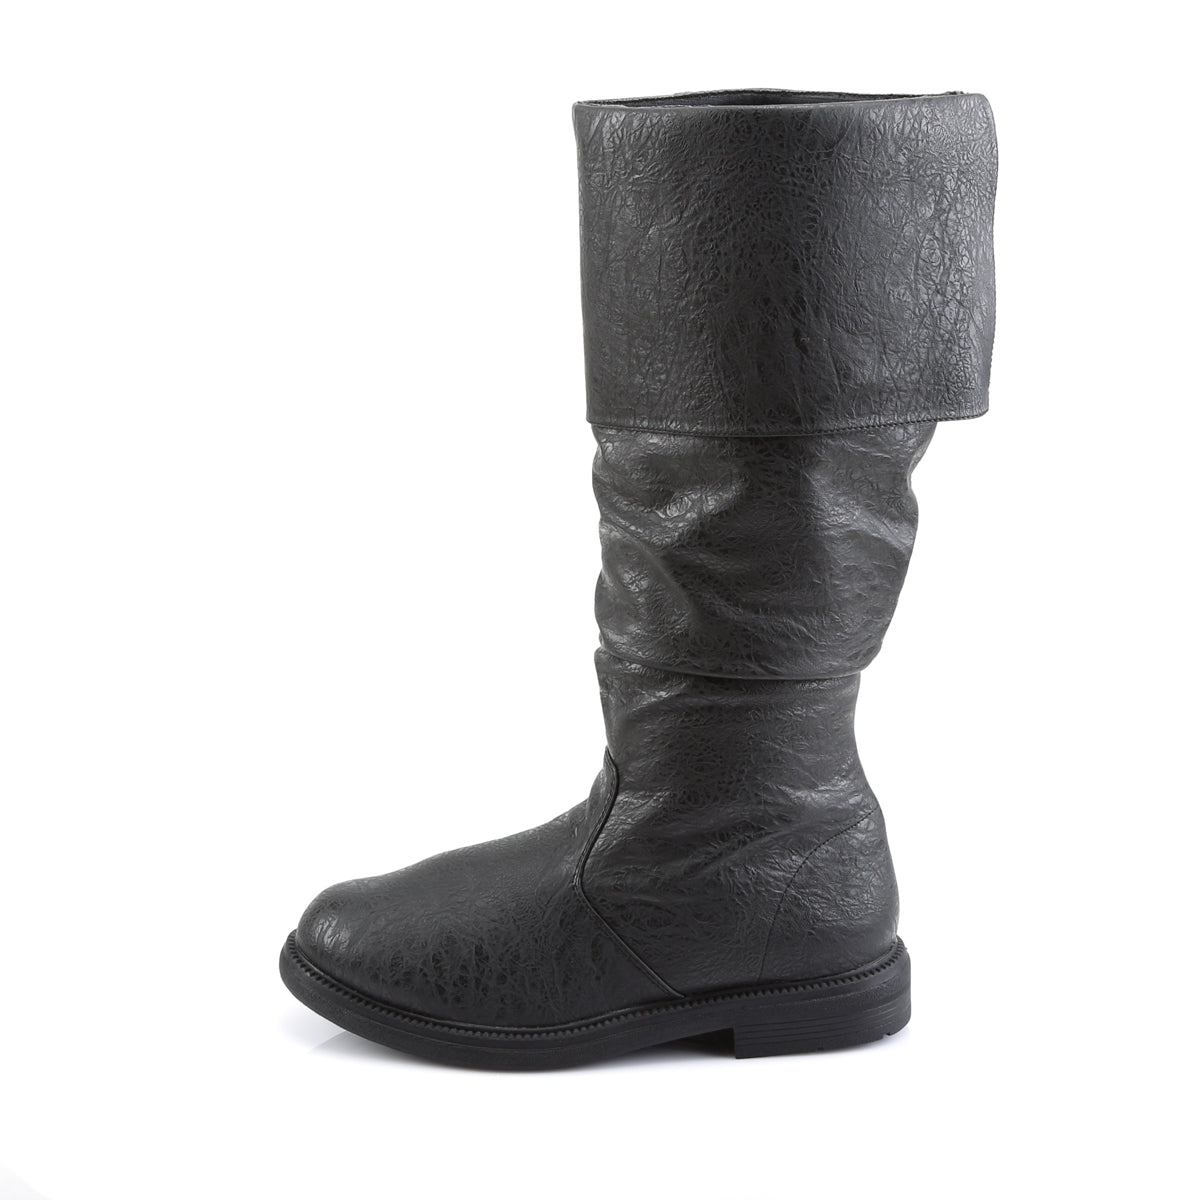 ROBINHOOD-100 Fancy Dress Costume Funtasma Men's Boots Black Distressed Pu